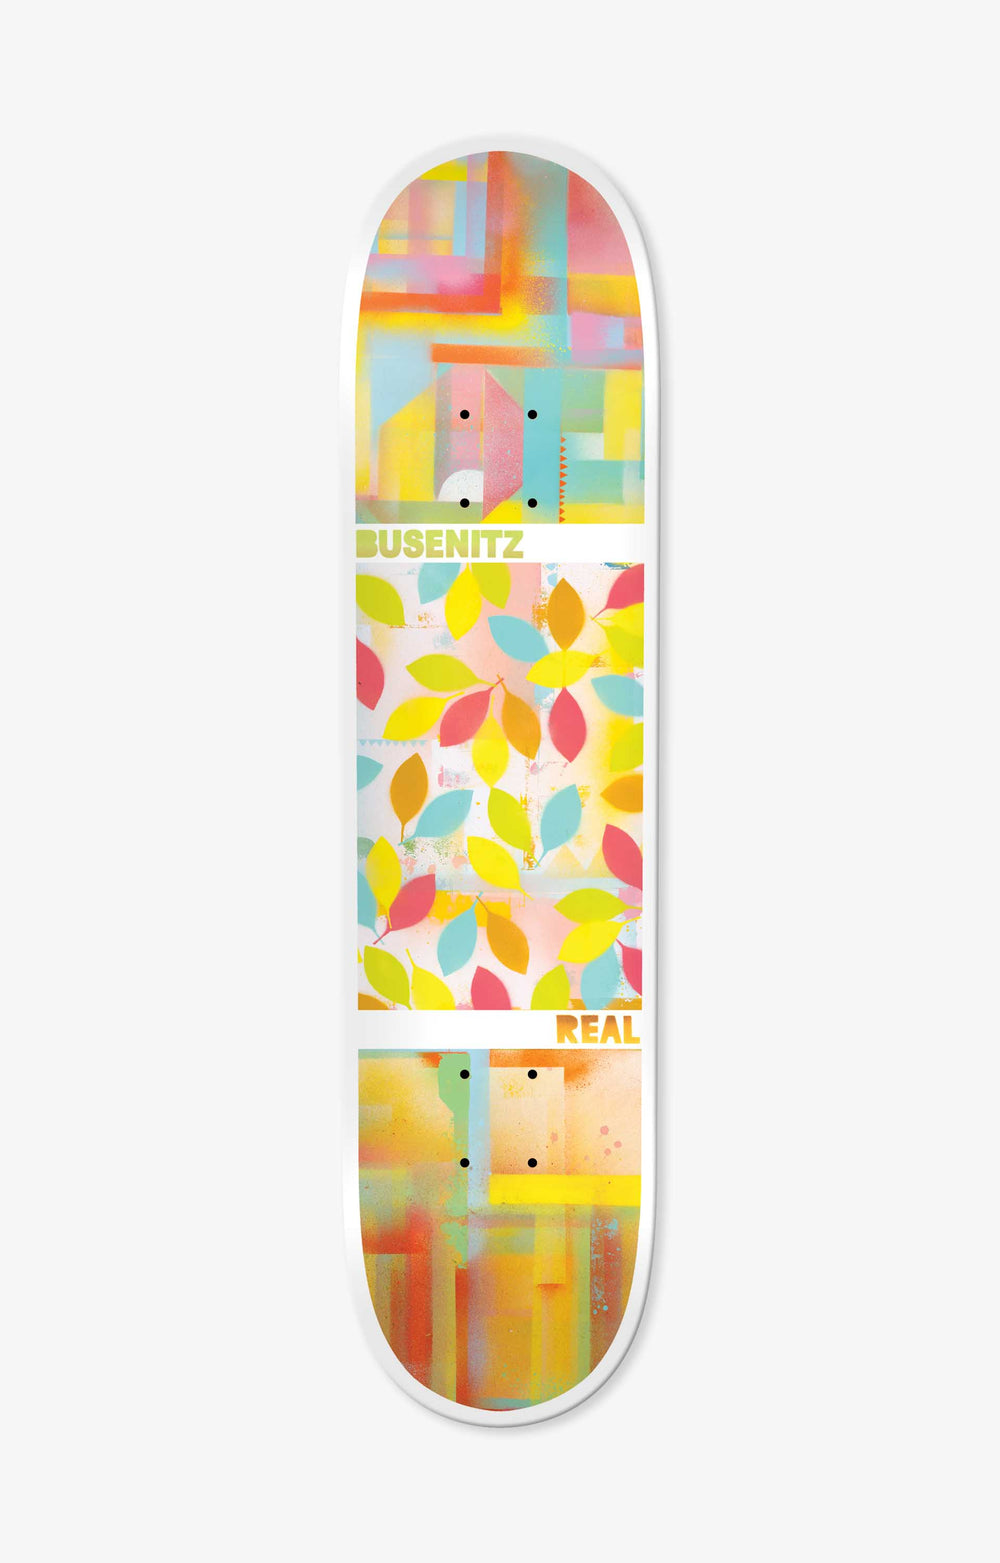 Real Busenitz Acrylics Skateboard Deck, 8.06"